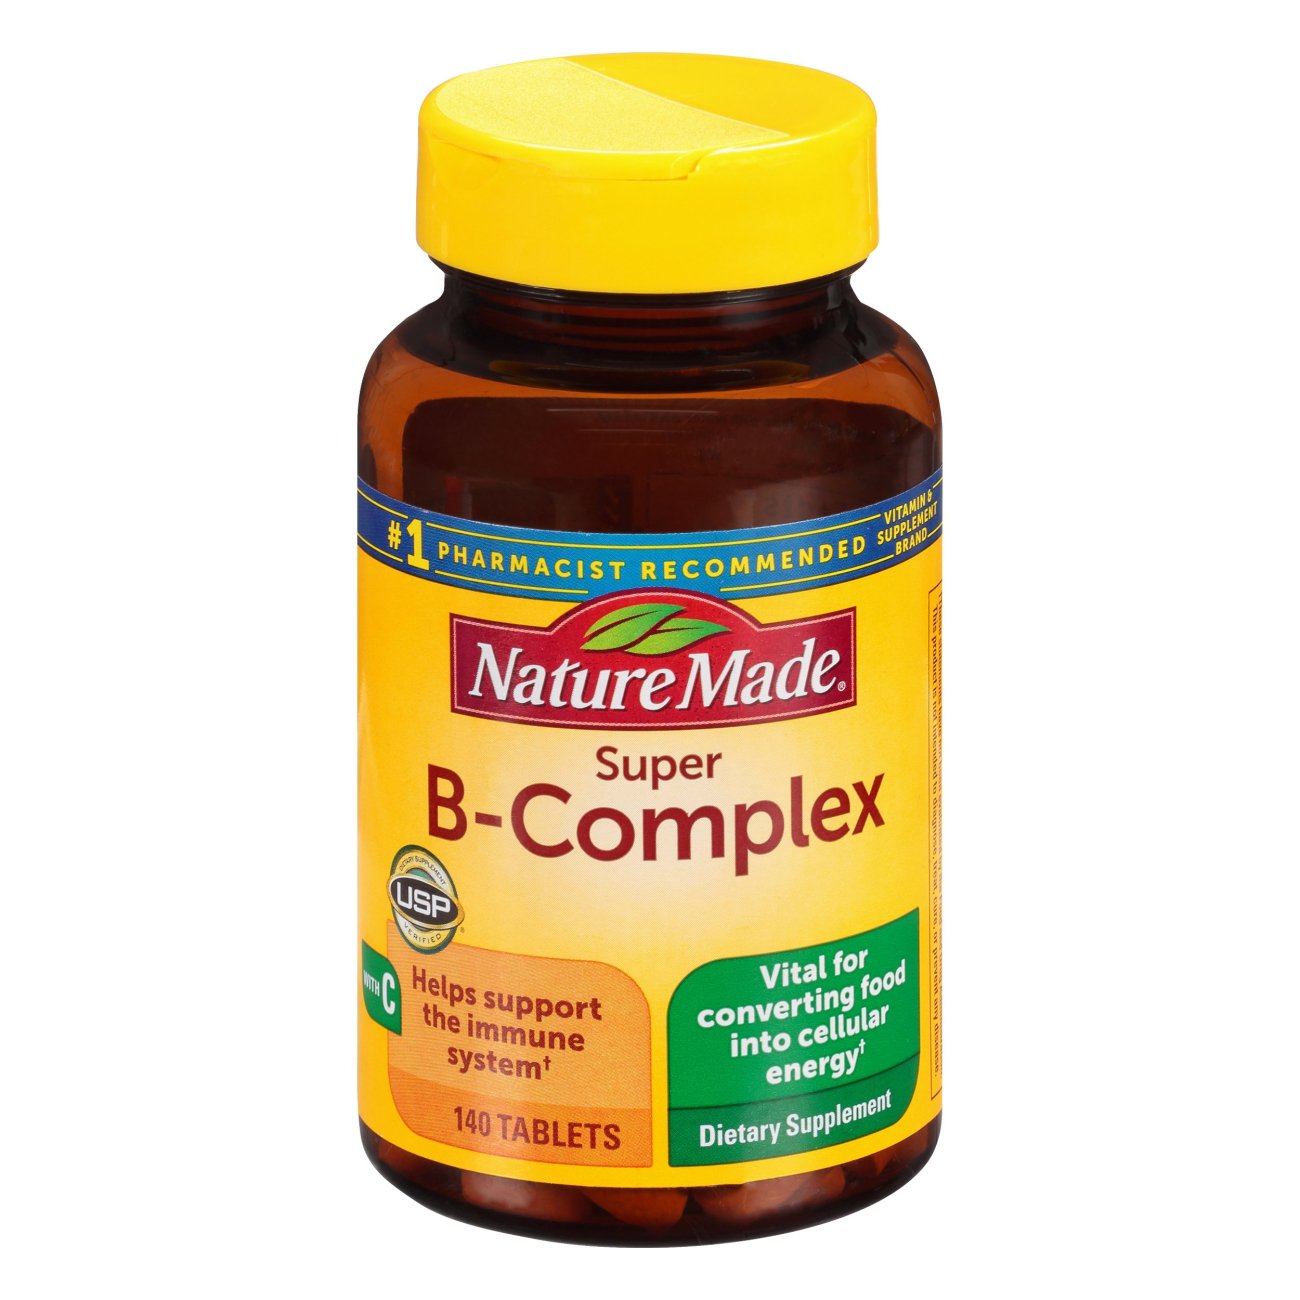 Nature Made B-Complex - Shop Vitamins & Supplements at H-E-B